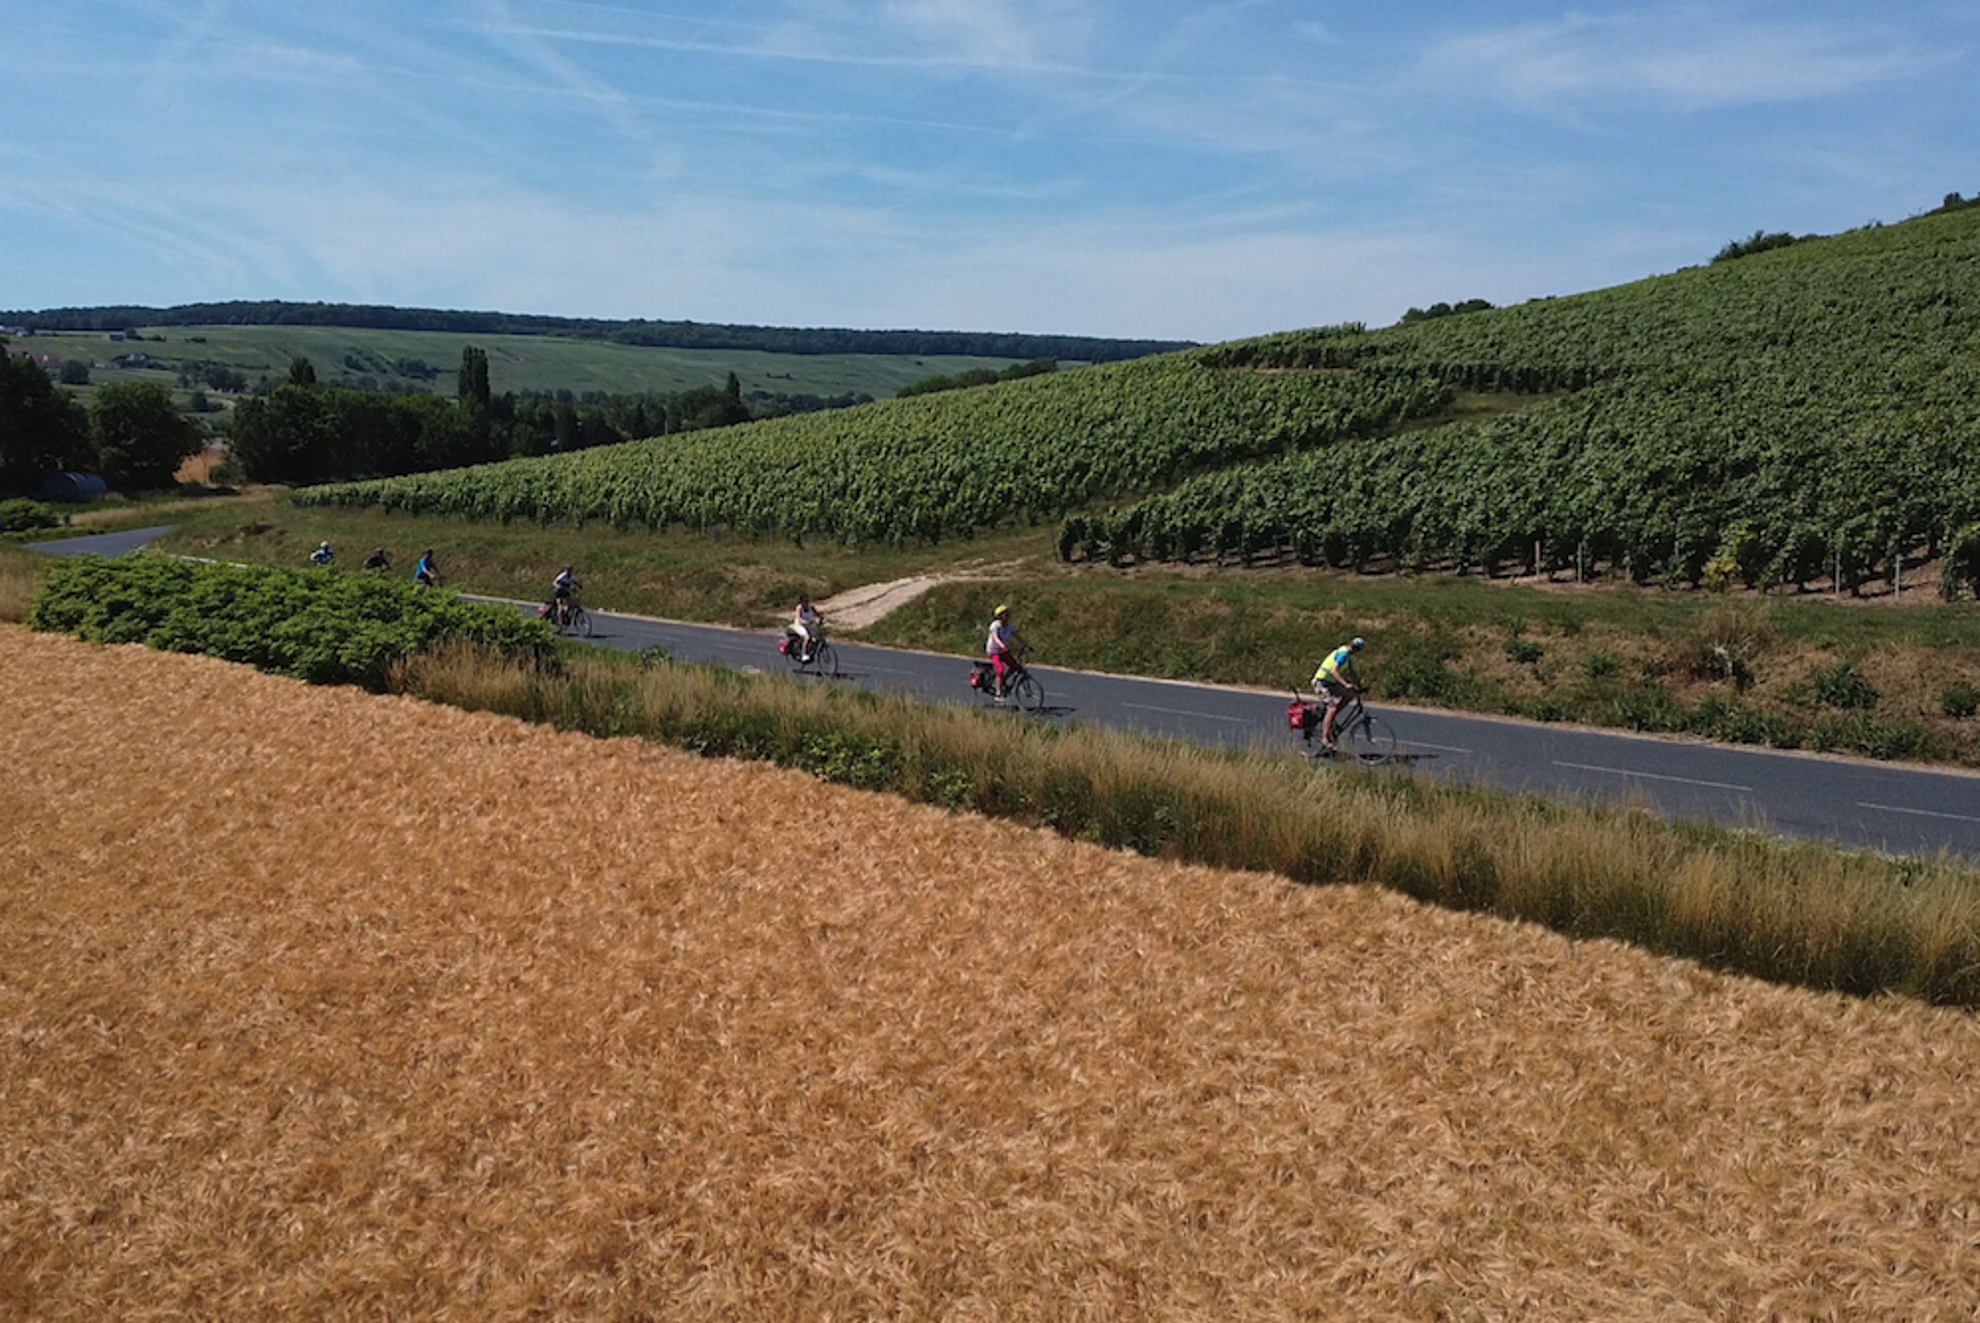 Biking in vineyard area Champagne region